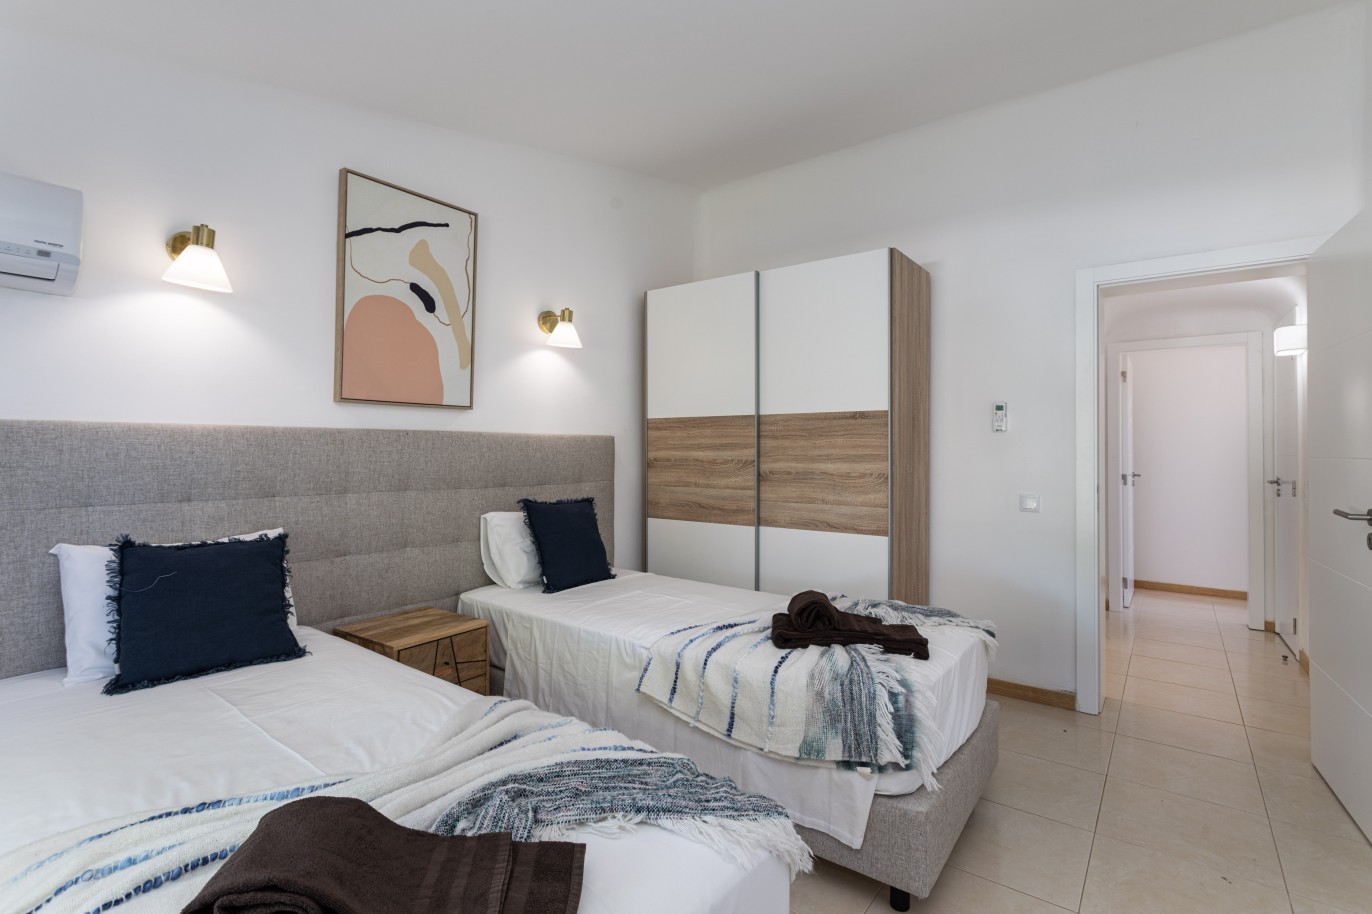 4 bedroom villa with pool, for sale in Albufeira, Algarve_233601